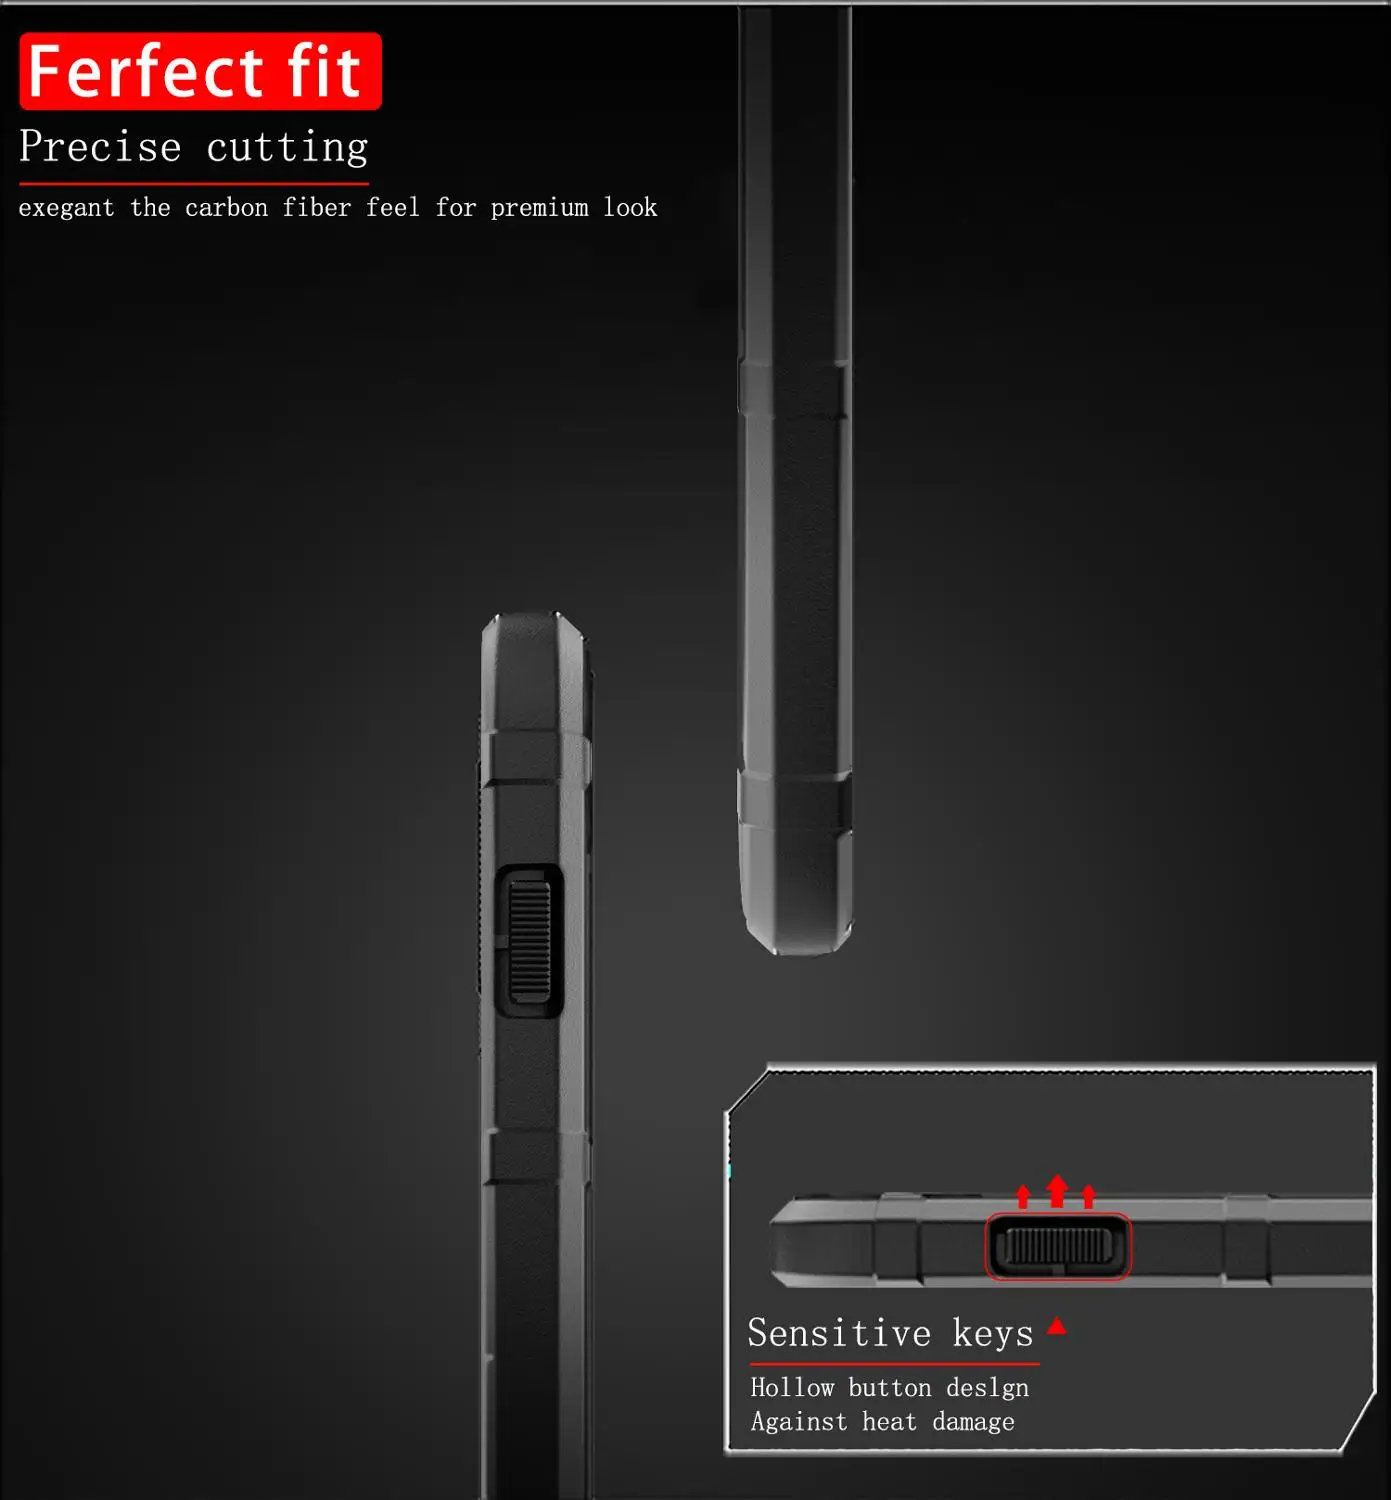 Robustný Štít Shockproof Brnenie puzdro Pre iPhone 12 11 Pro Max 11 Pro XS Max XR XS X 7 8 6 6 Plus SE 2020 3D Mriežka Kryt Coque